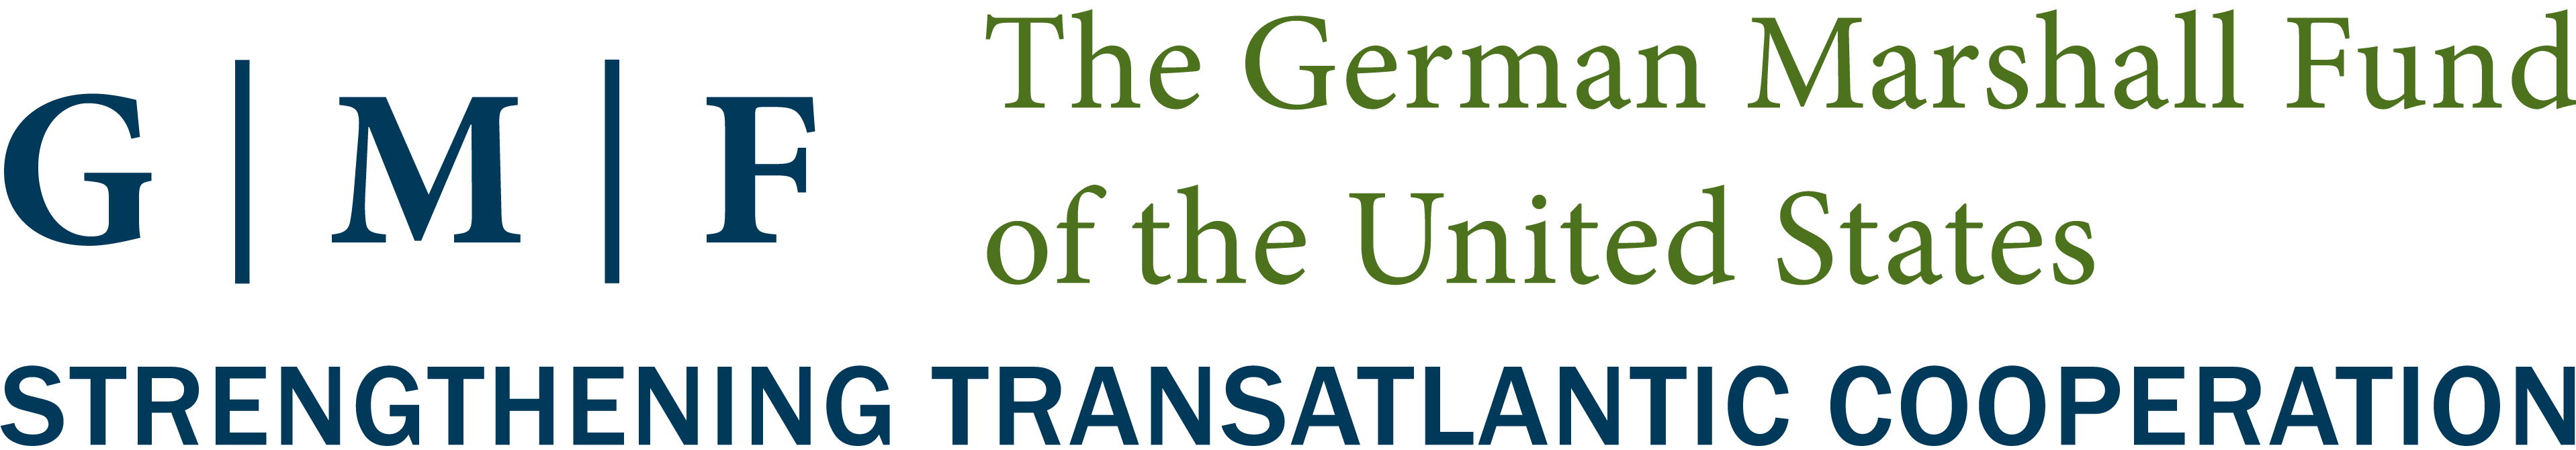 German Marshall Fund logo